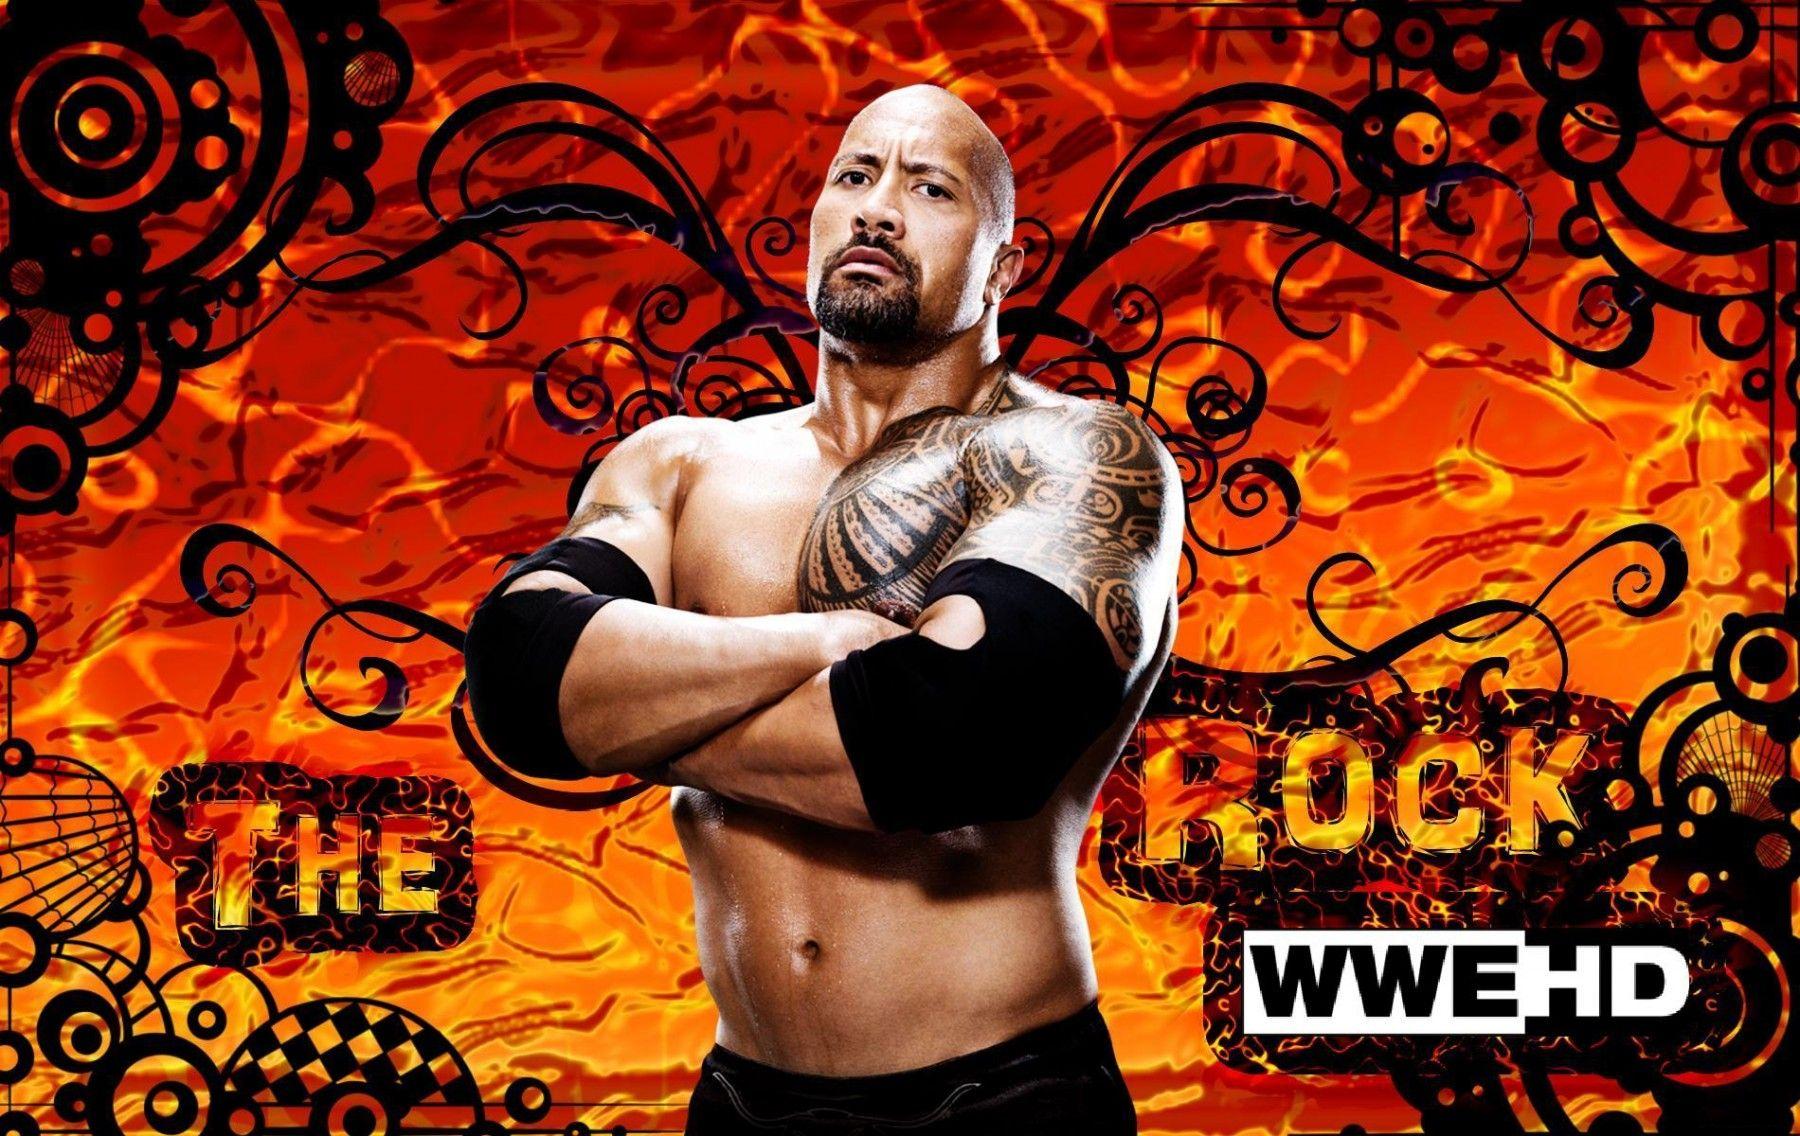 The Rock Wallpaper Superstars, WWE Wallpaper, WWE Results